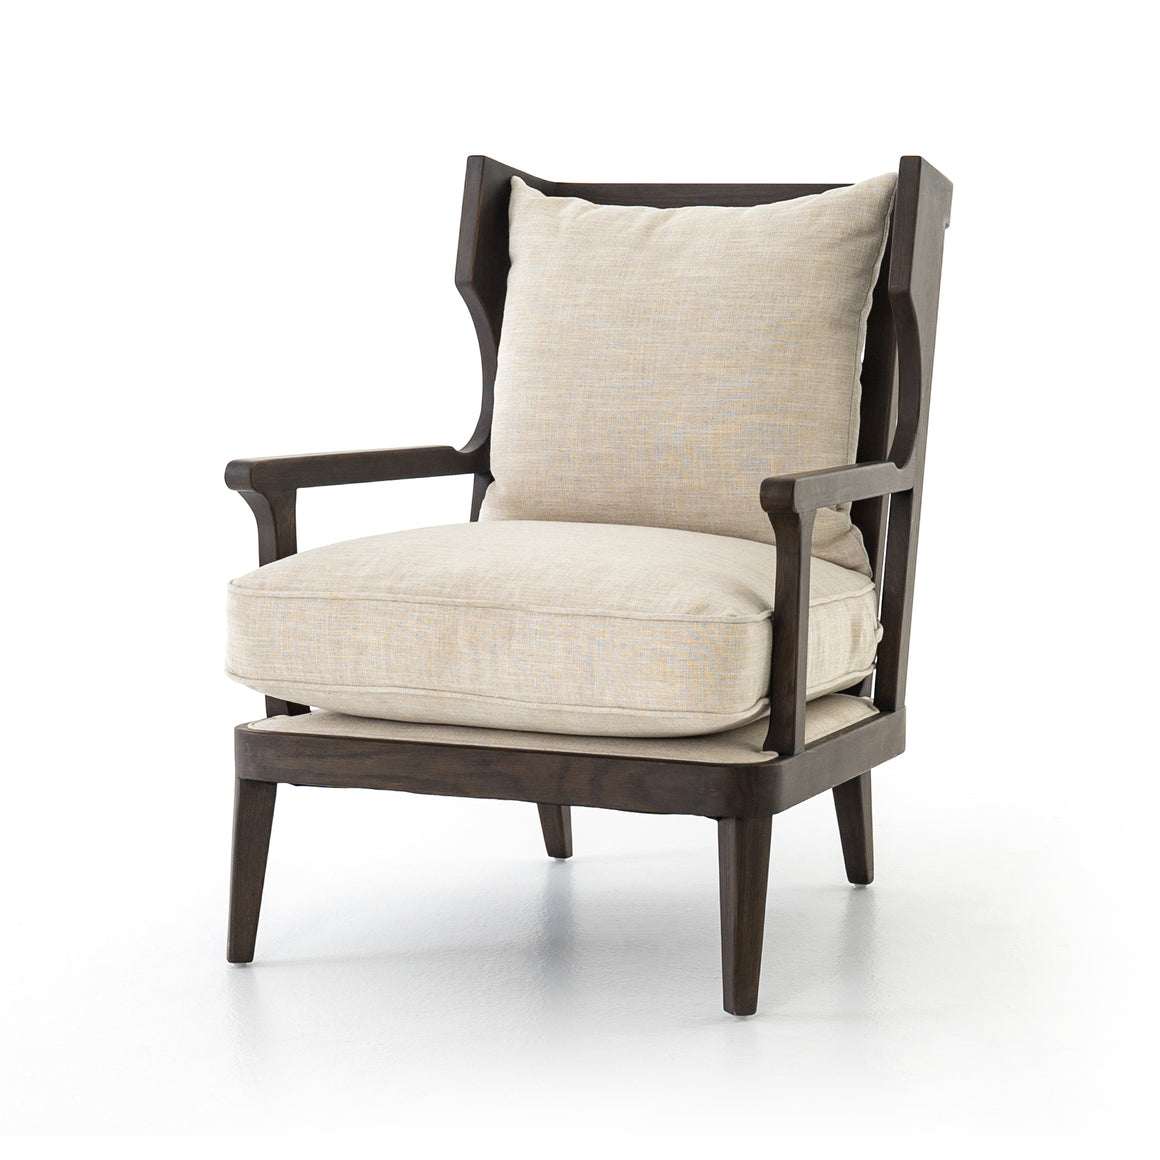 Lance Wingback Chair - Burnt Oak + Ivory - Classic Carolina Home